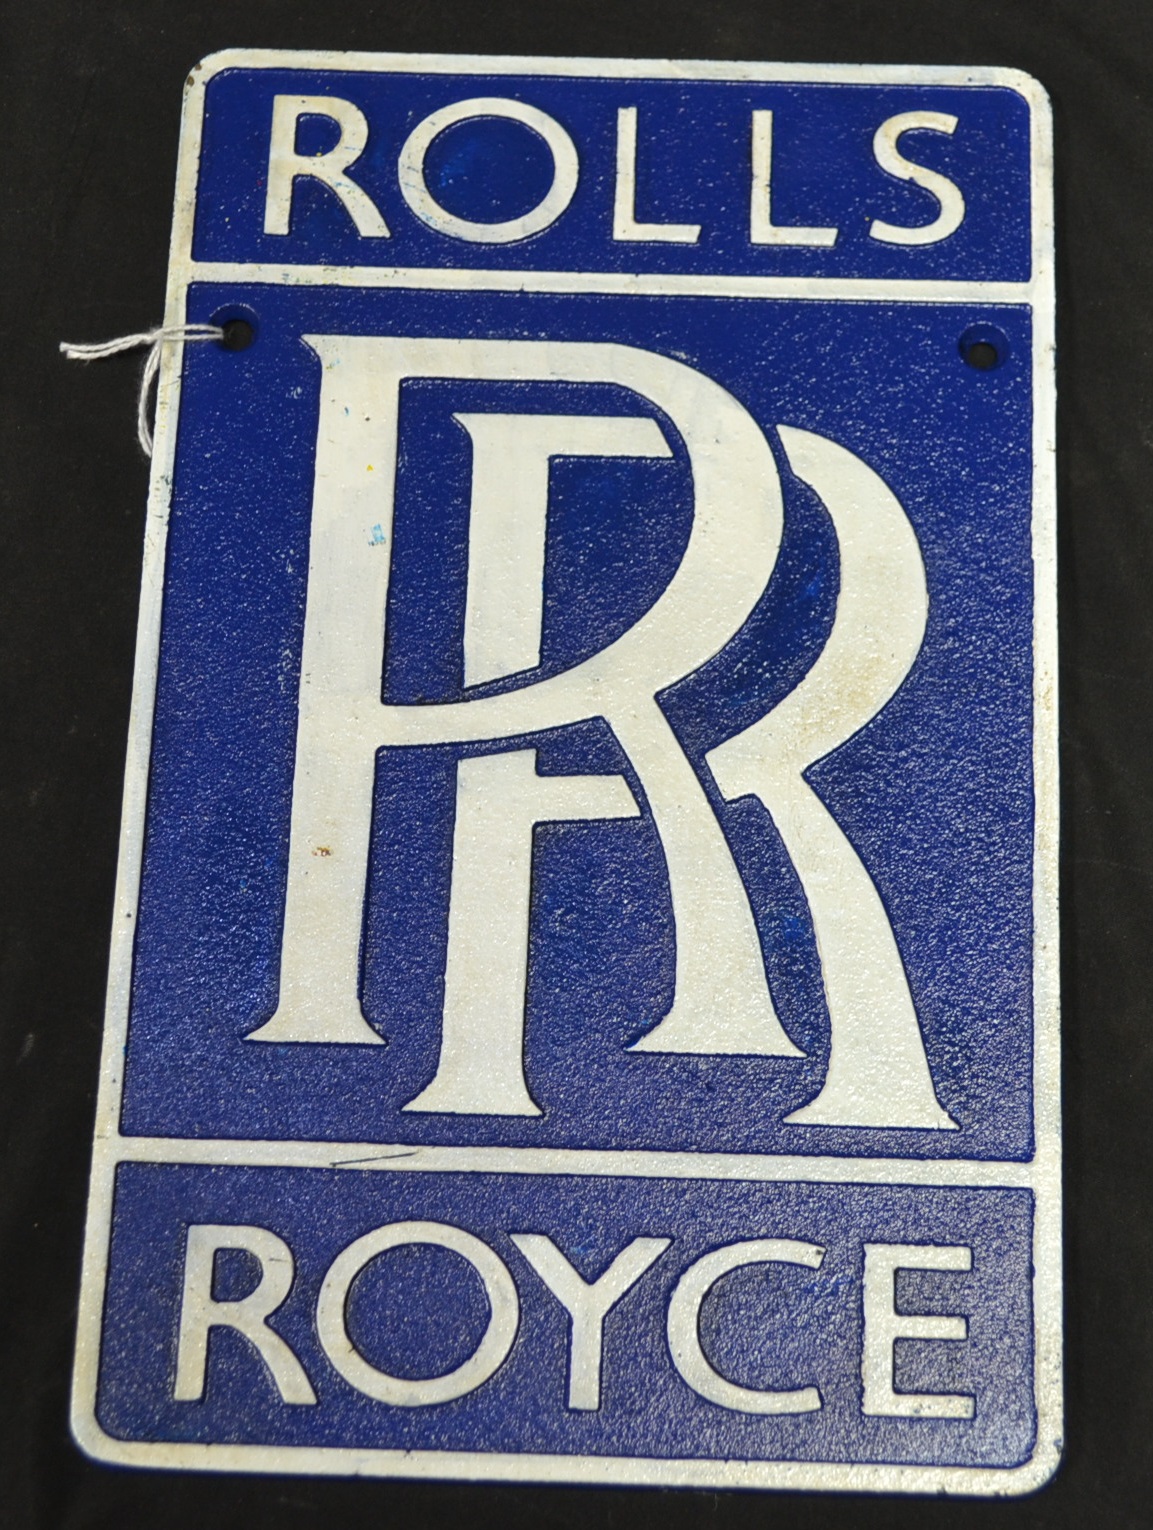 A cast metal reproduction Rolls Royce wall plaque